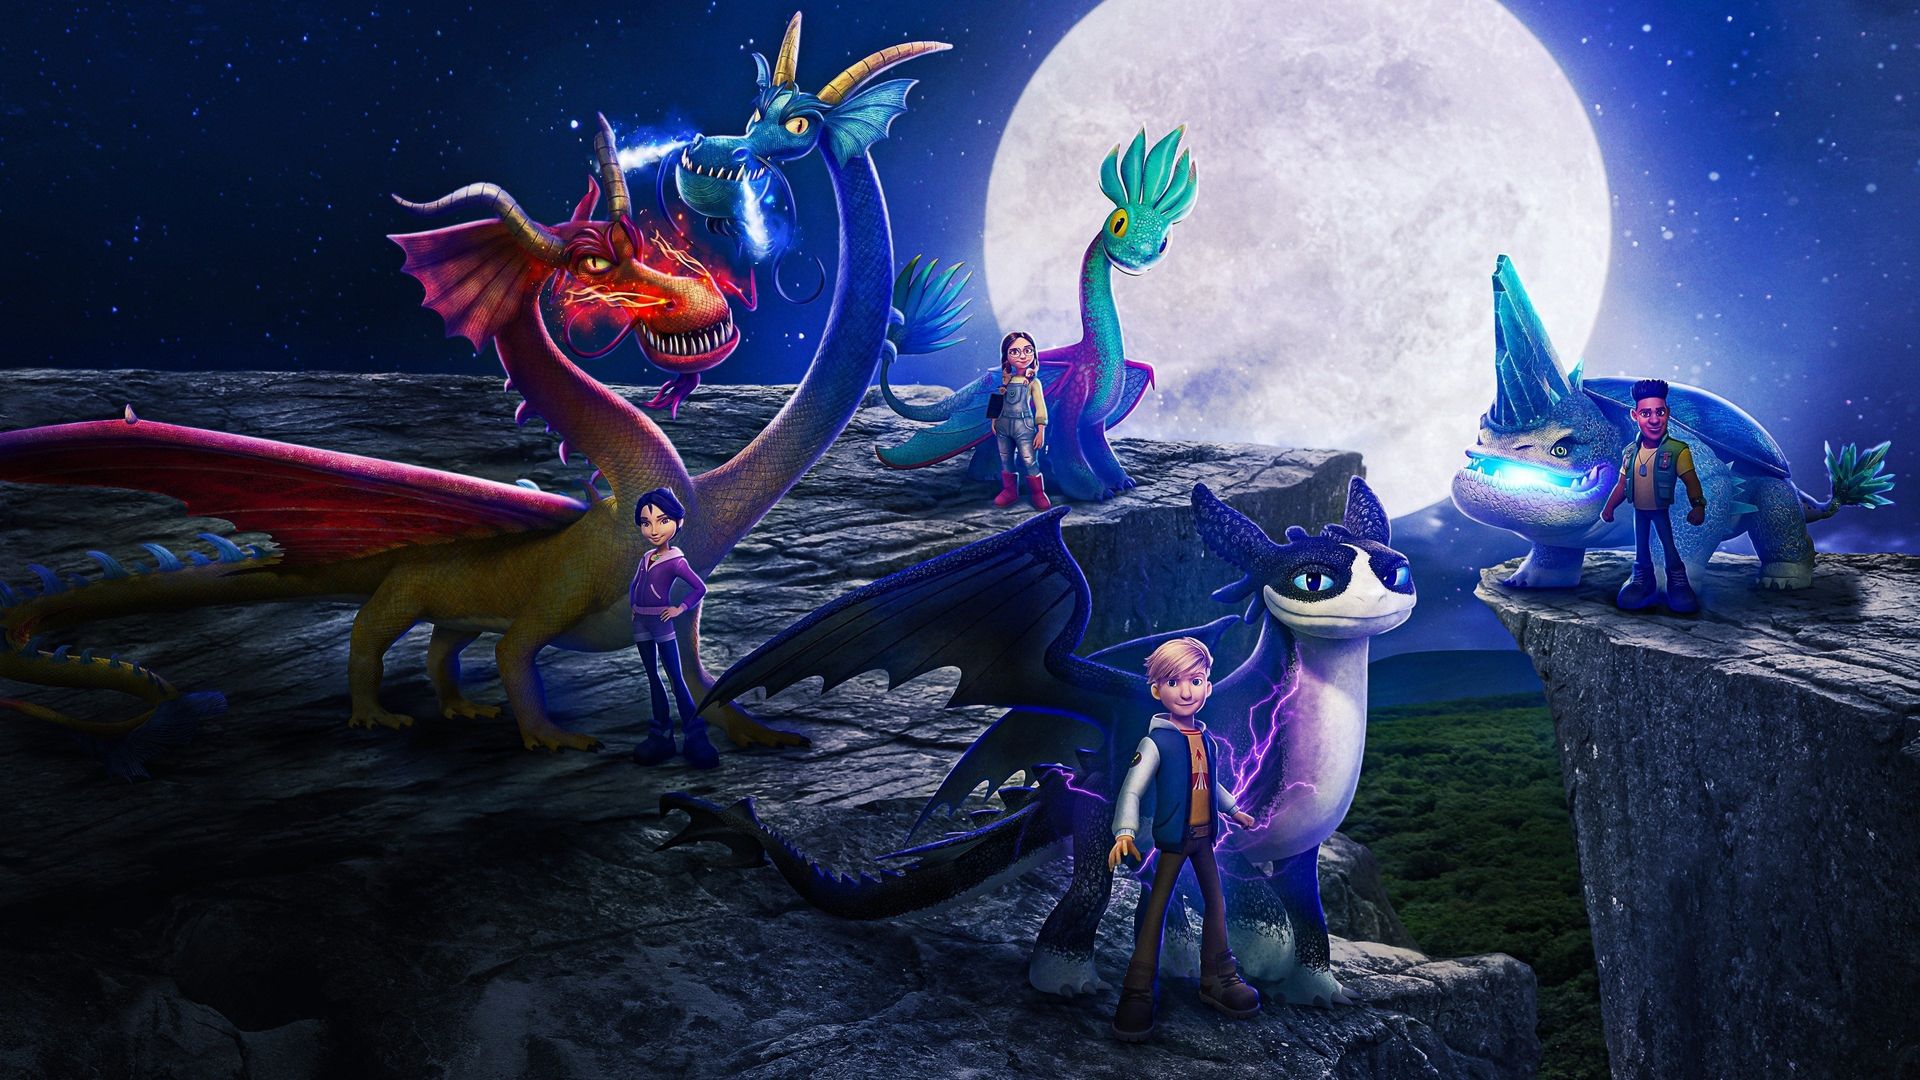 Dragons The Nine Realms Adventure Set Tom & Thunder Action Figure [Purple  Version]